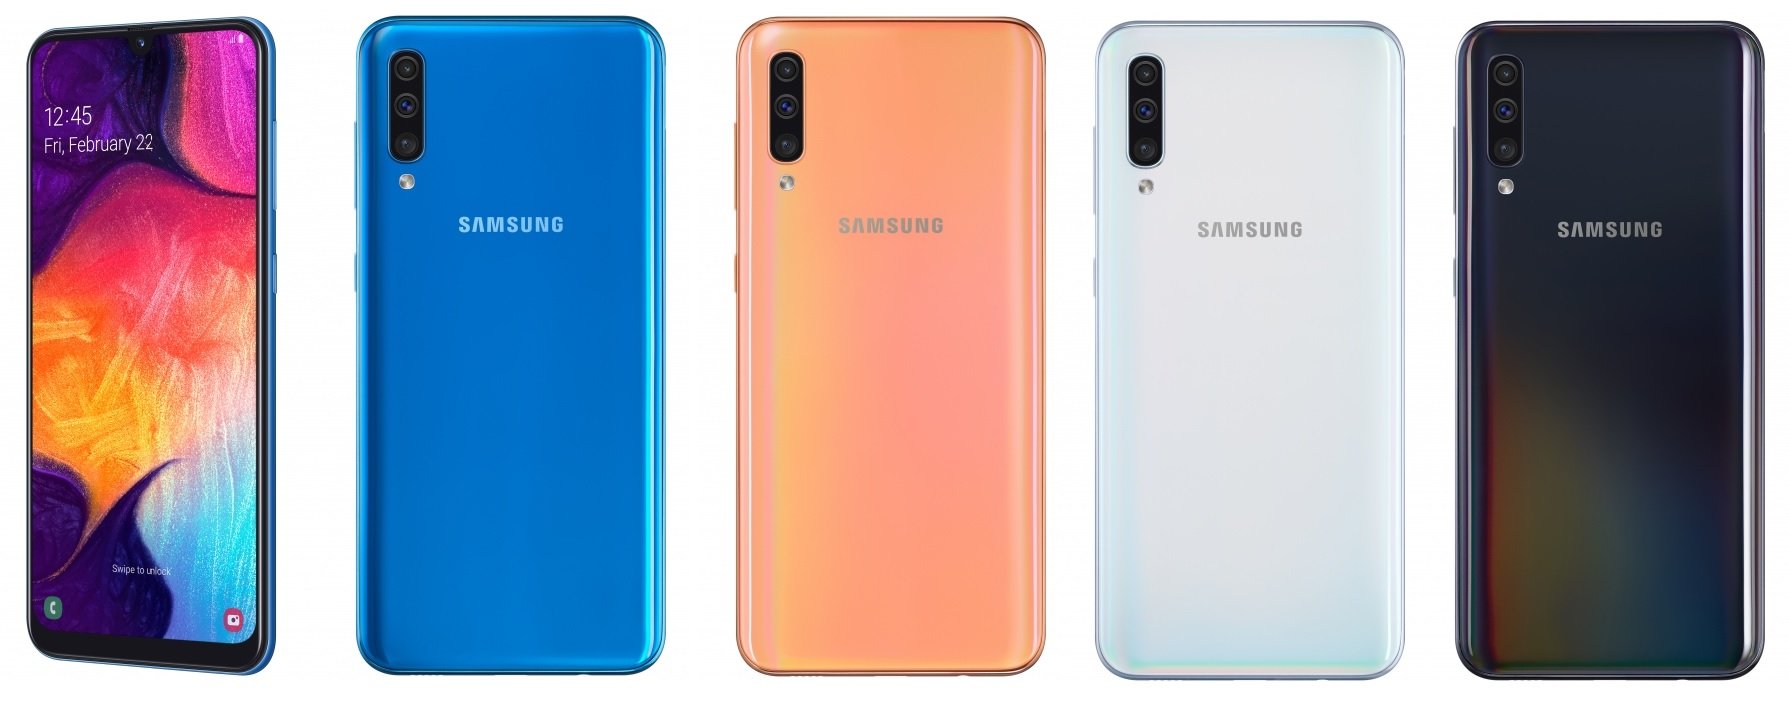 Самсунг а55 характеристики цена отзывы. Samsung Galaxy a50 128. Самсунг галакси а 50. Samsung Galaxy a50 новый. Samsung Galaxy a50 64.